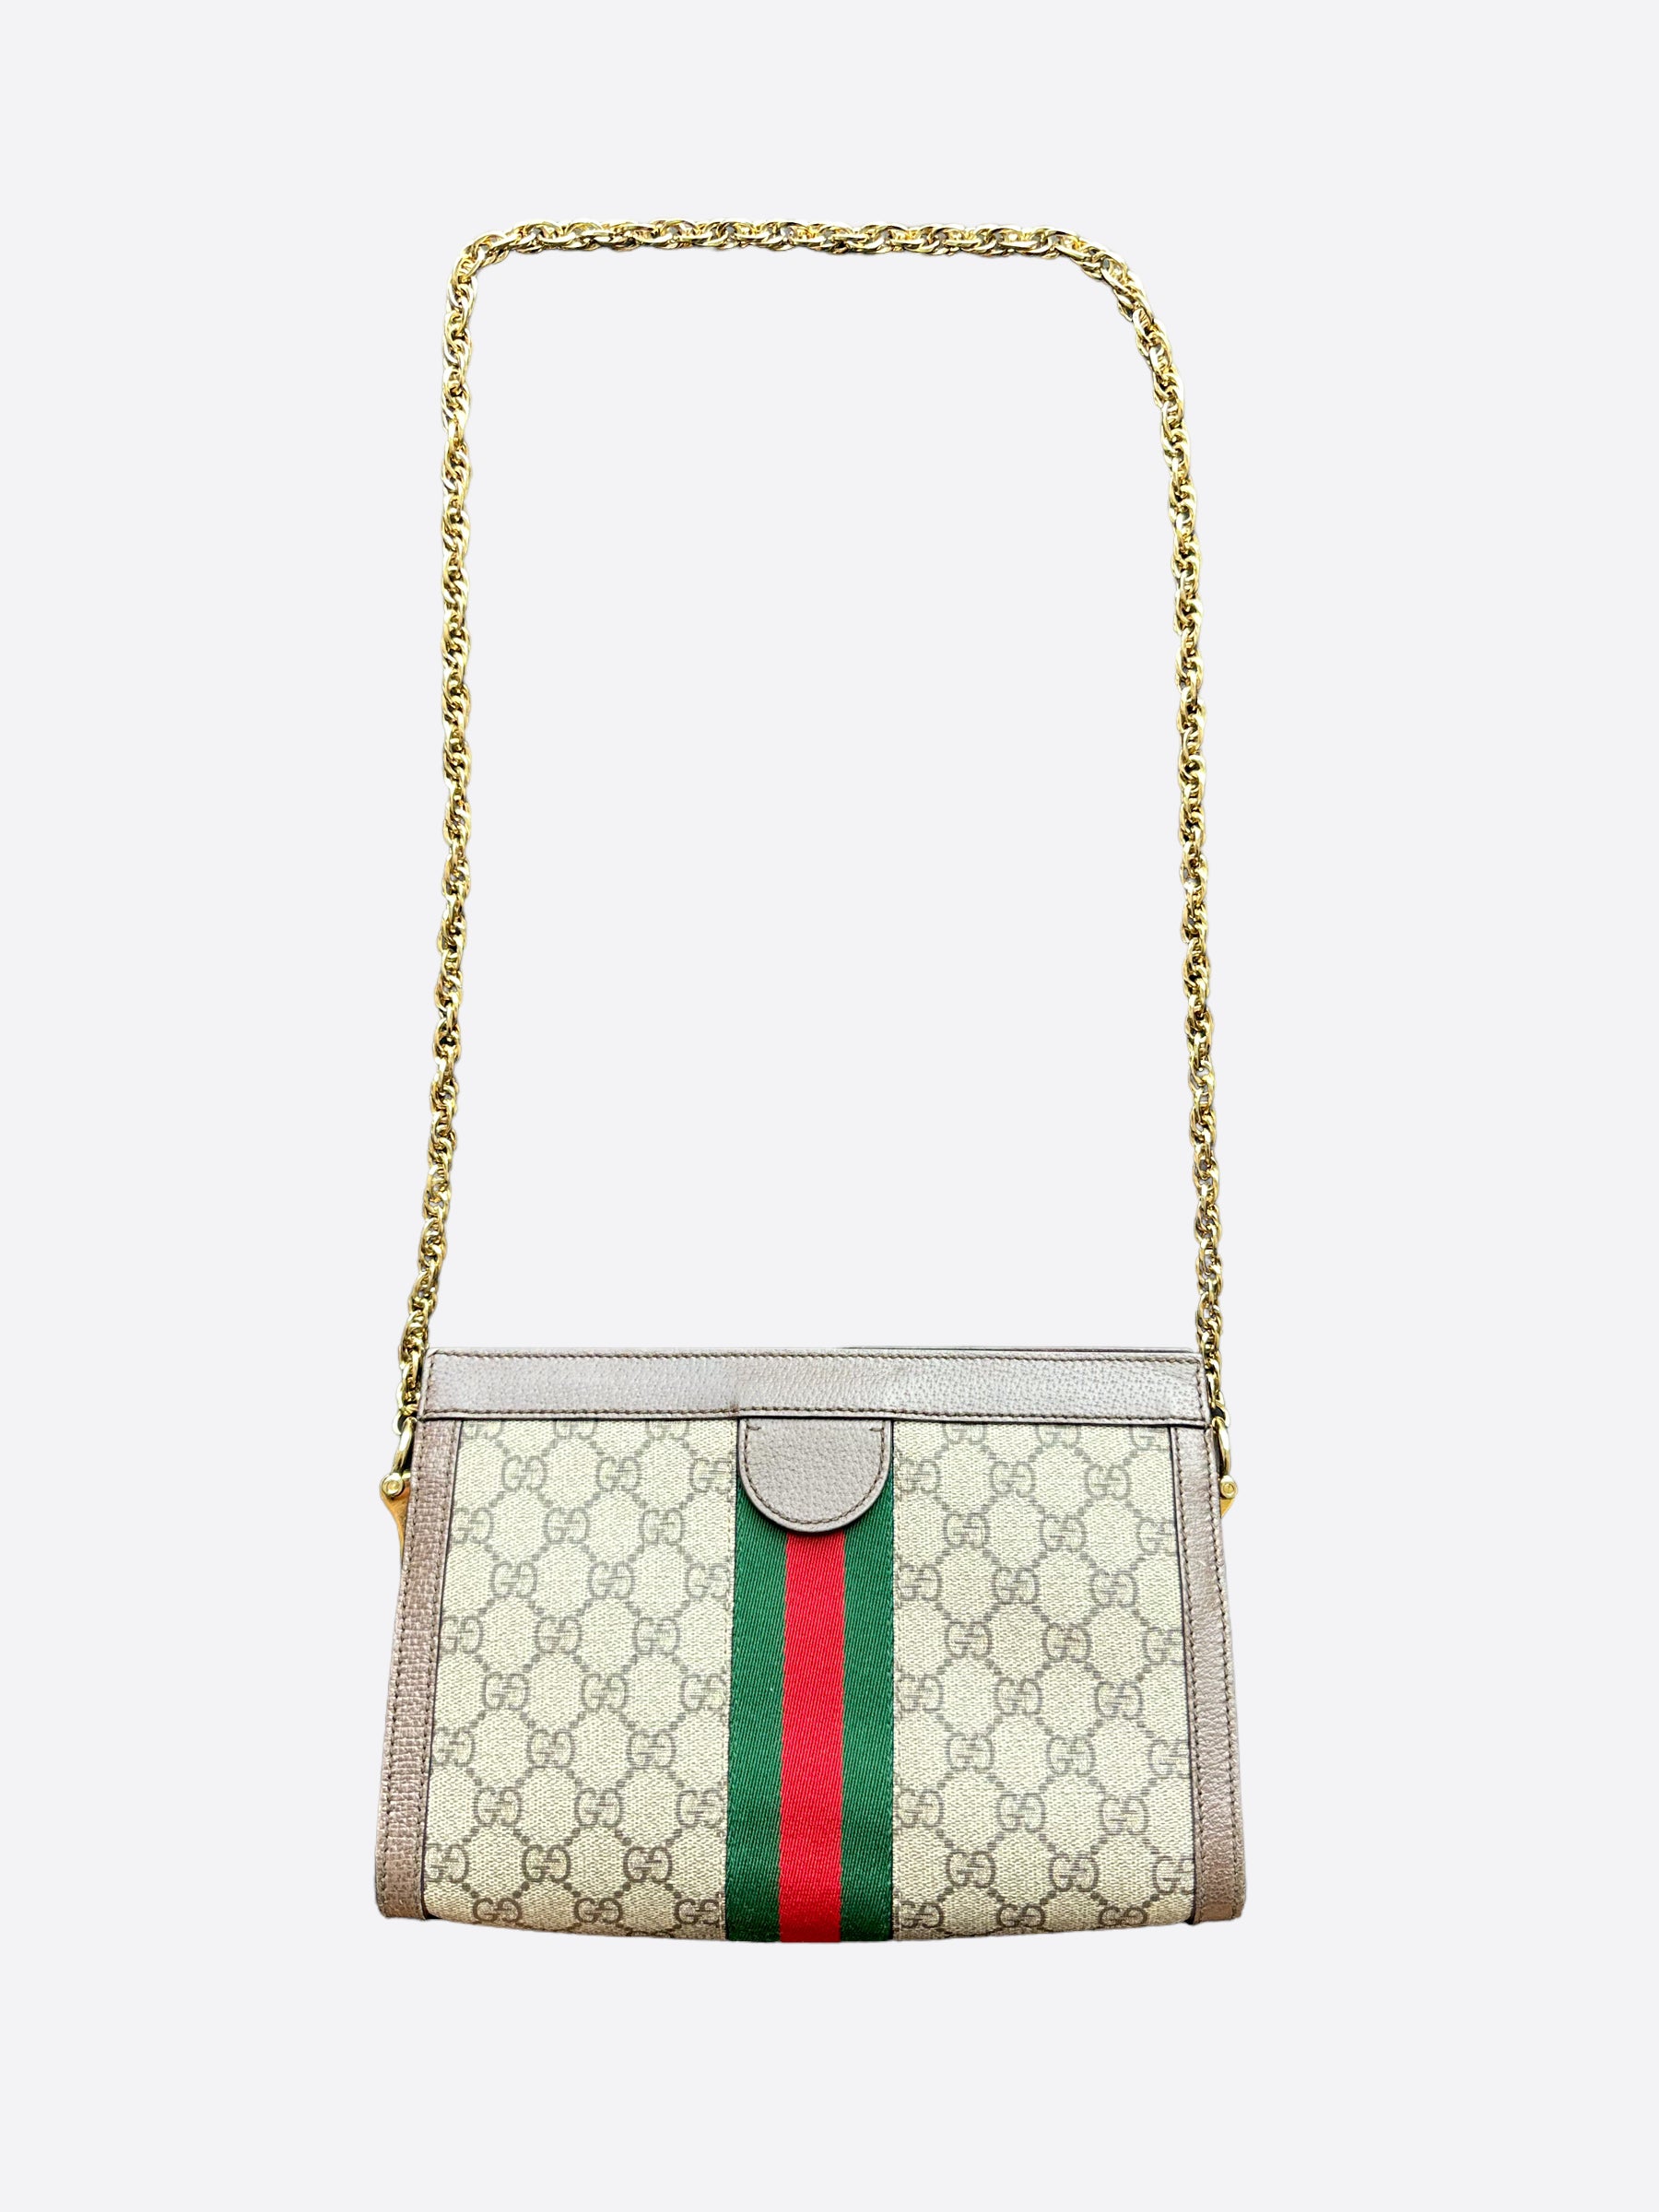 Gucci Brown GG Monogram Small Shoulder Bag